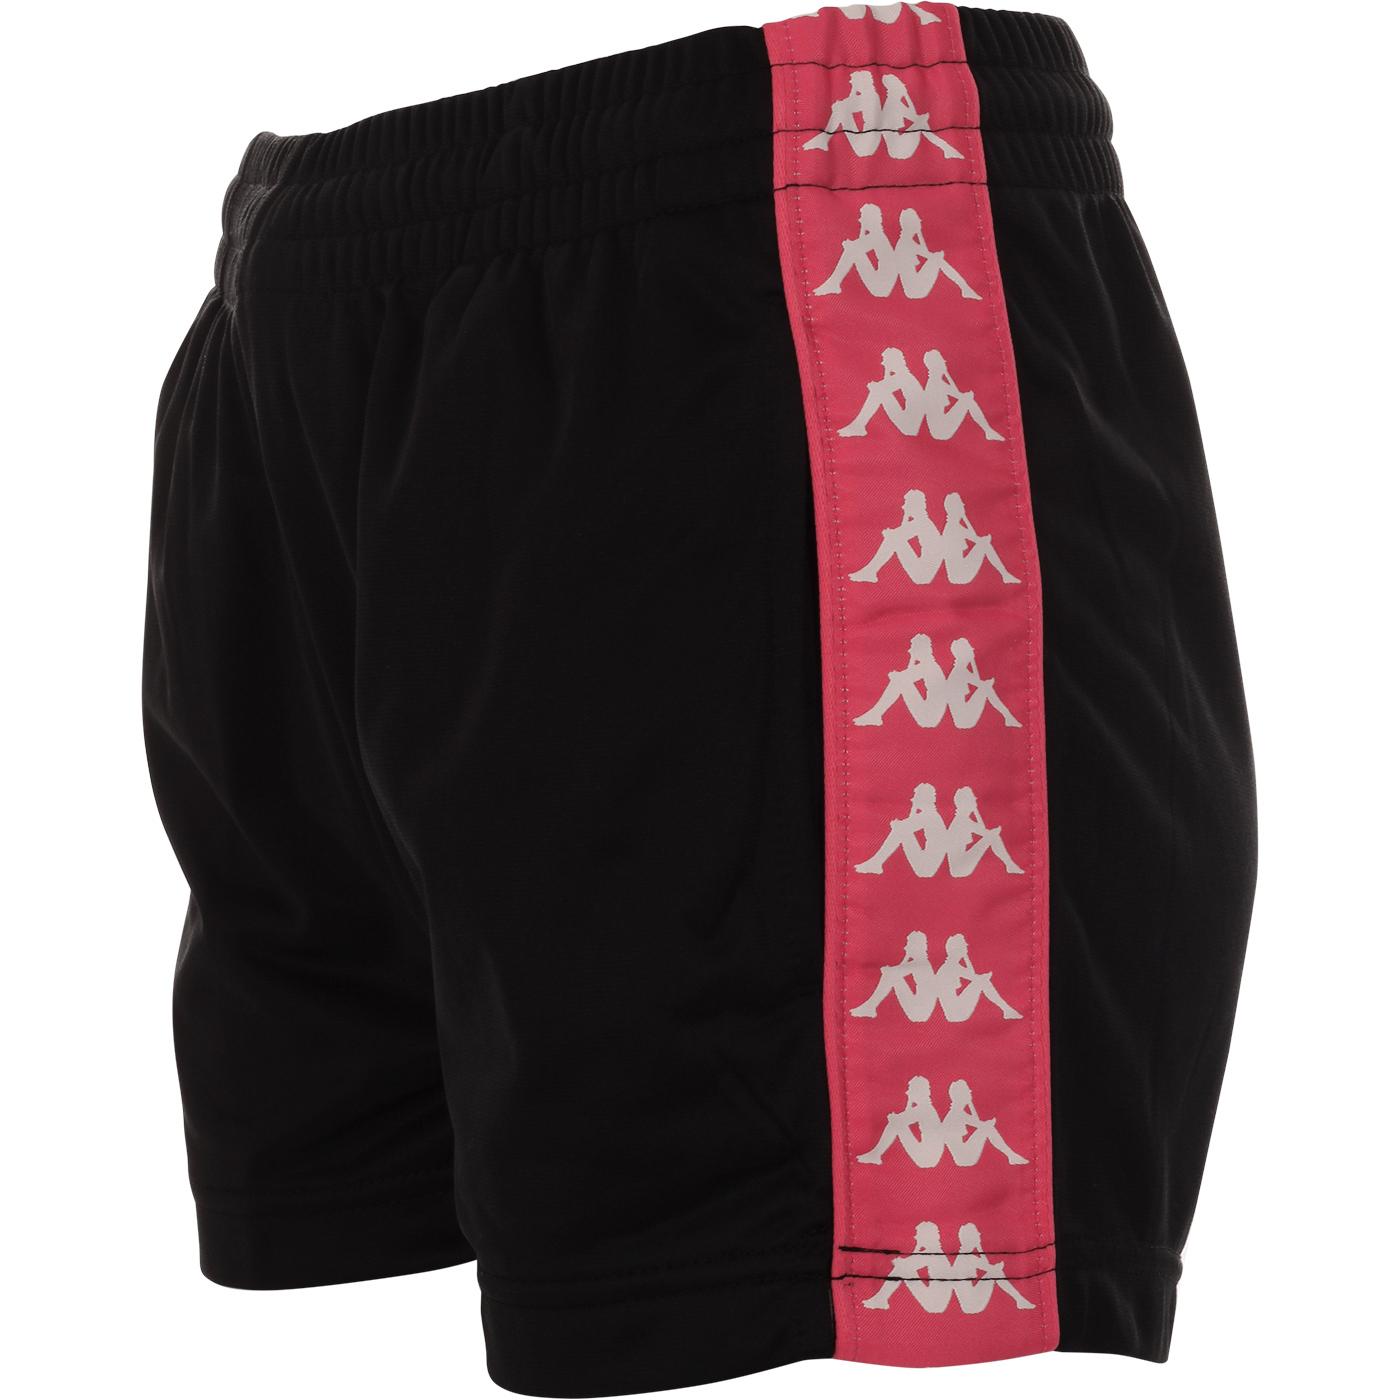 KAPPA Ladytread 222 Banda Women's Shorts in Black/Red